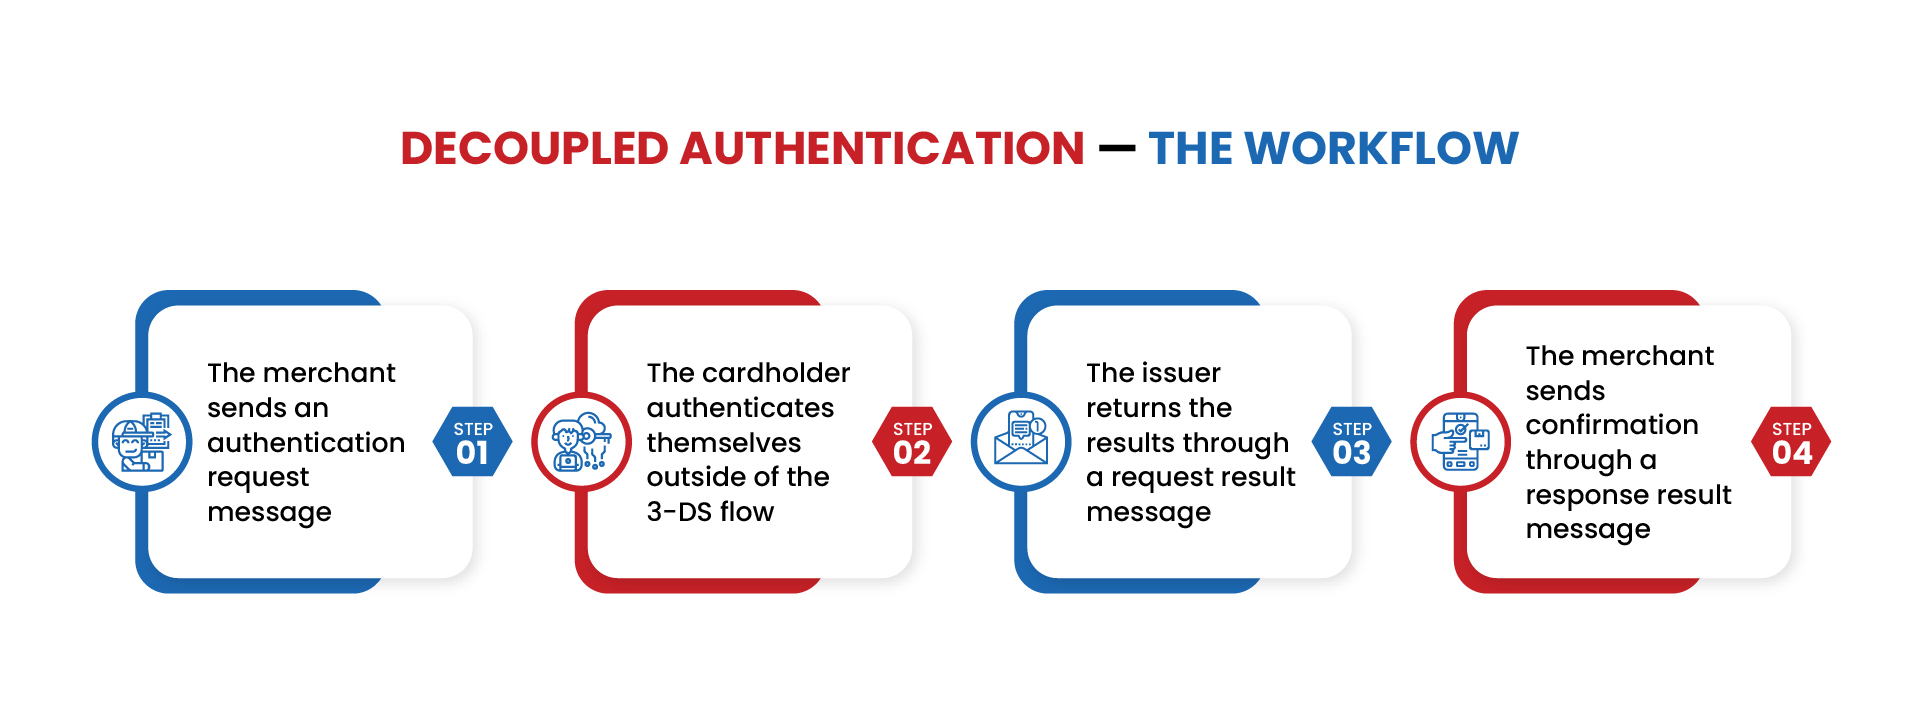 decoupled authentication workflow